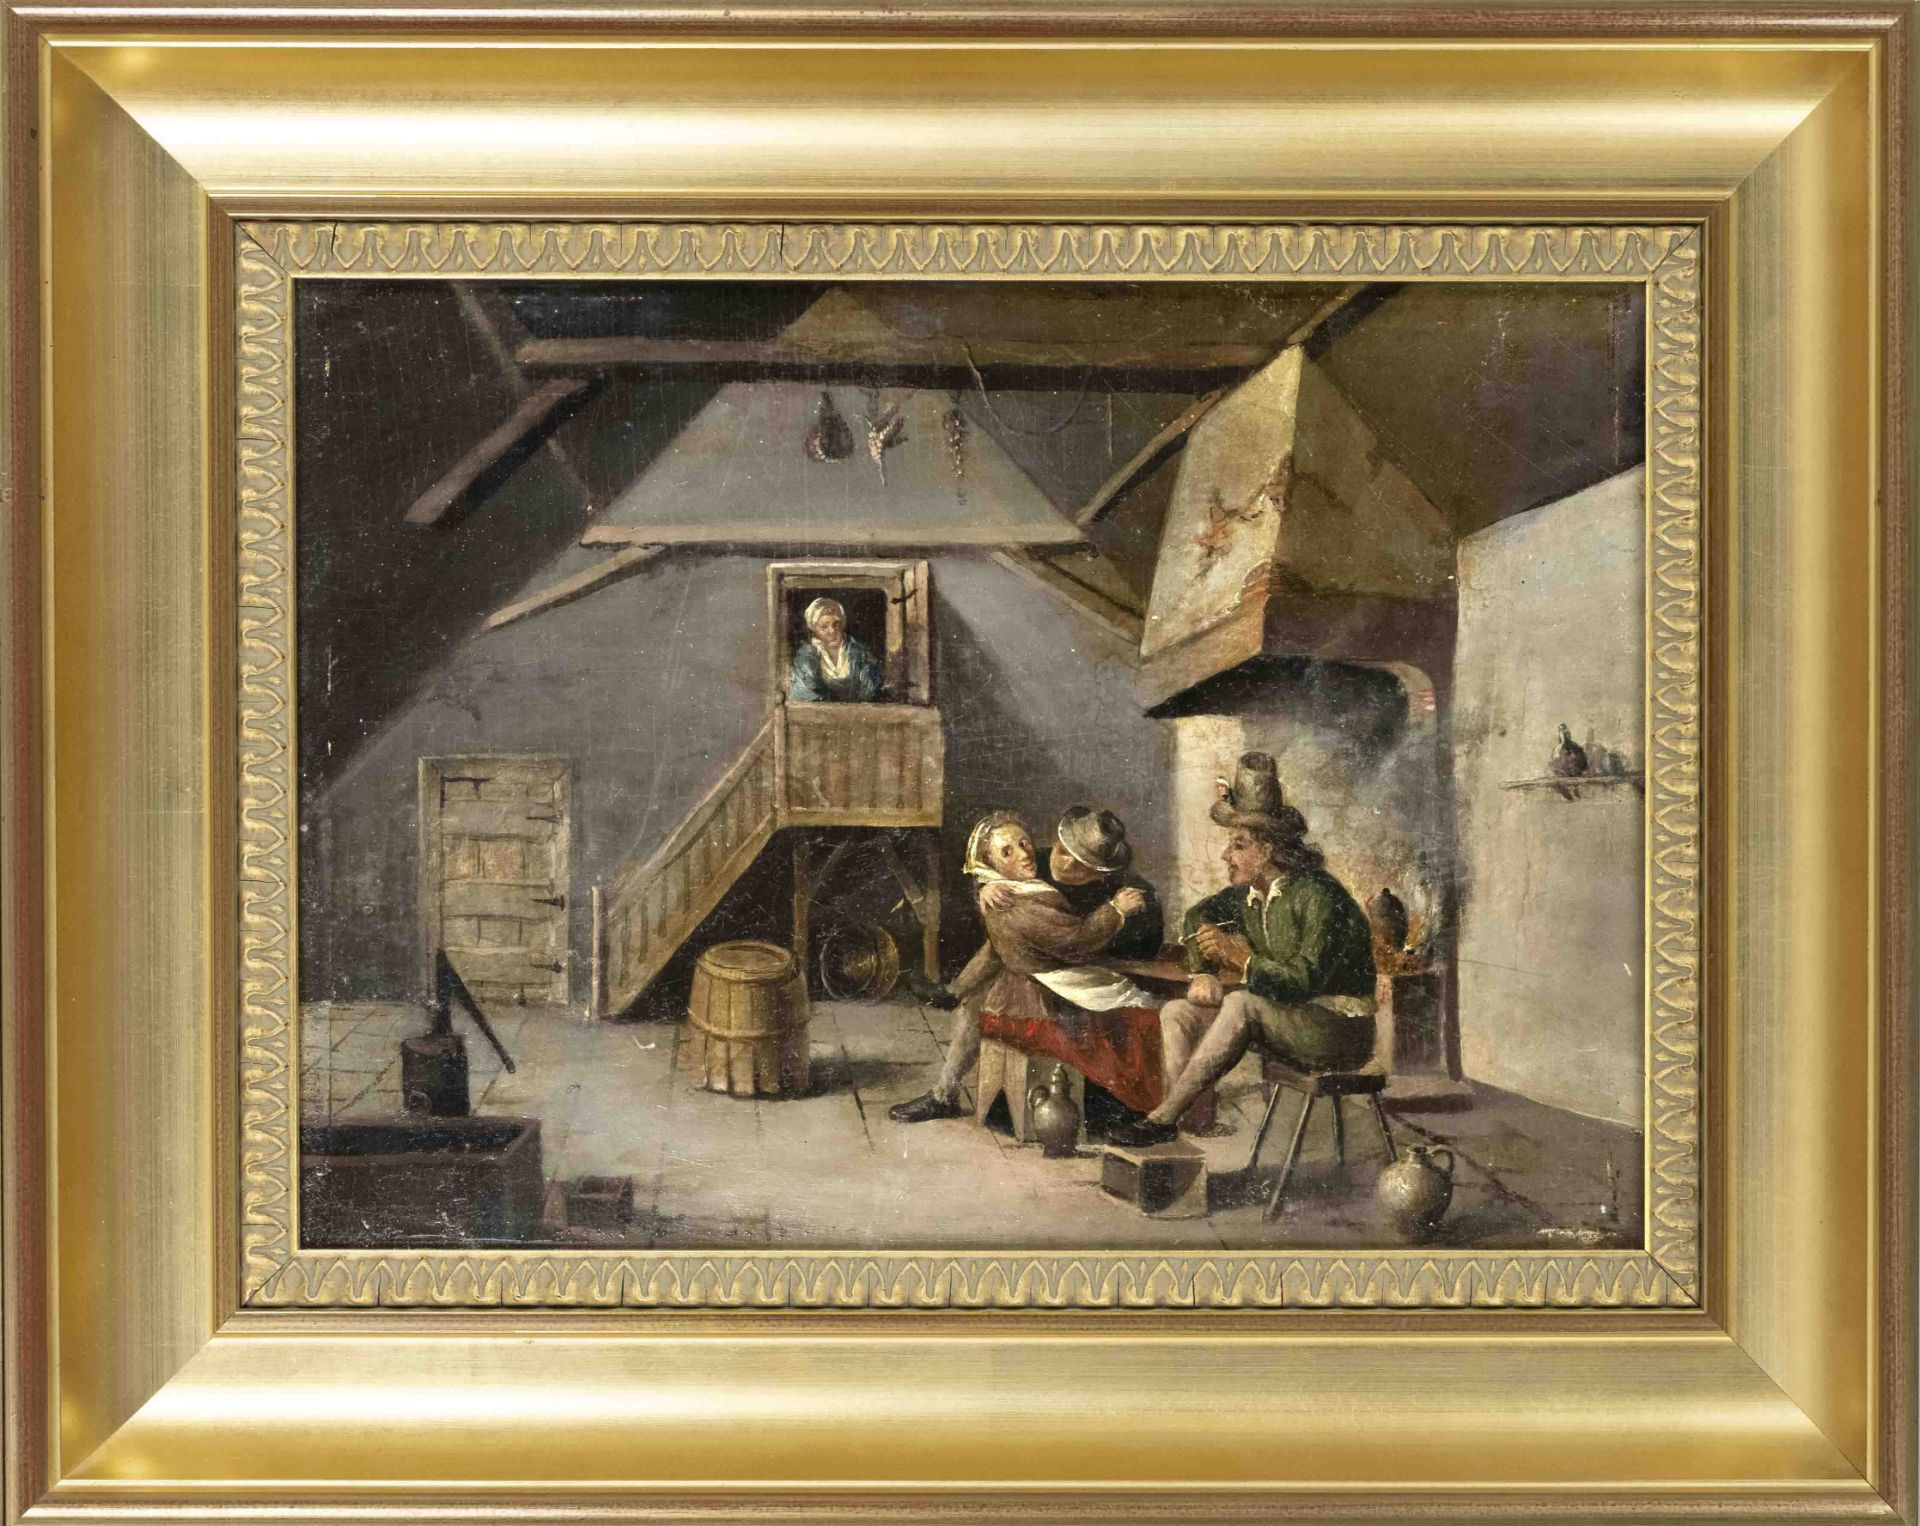 Anonymous artist of the 19th century, Inn scene in the style of the Dutch of the 17th century, oil